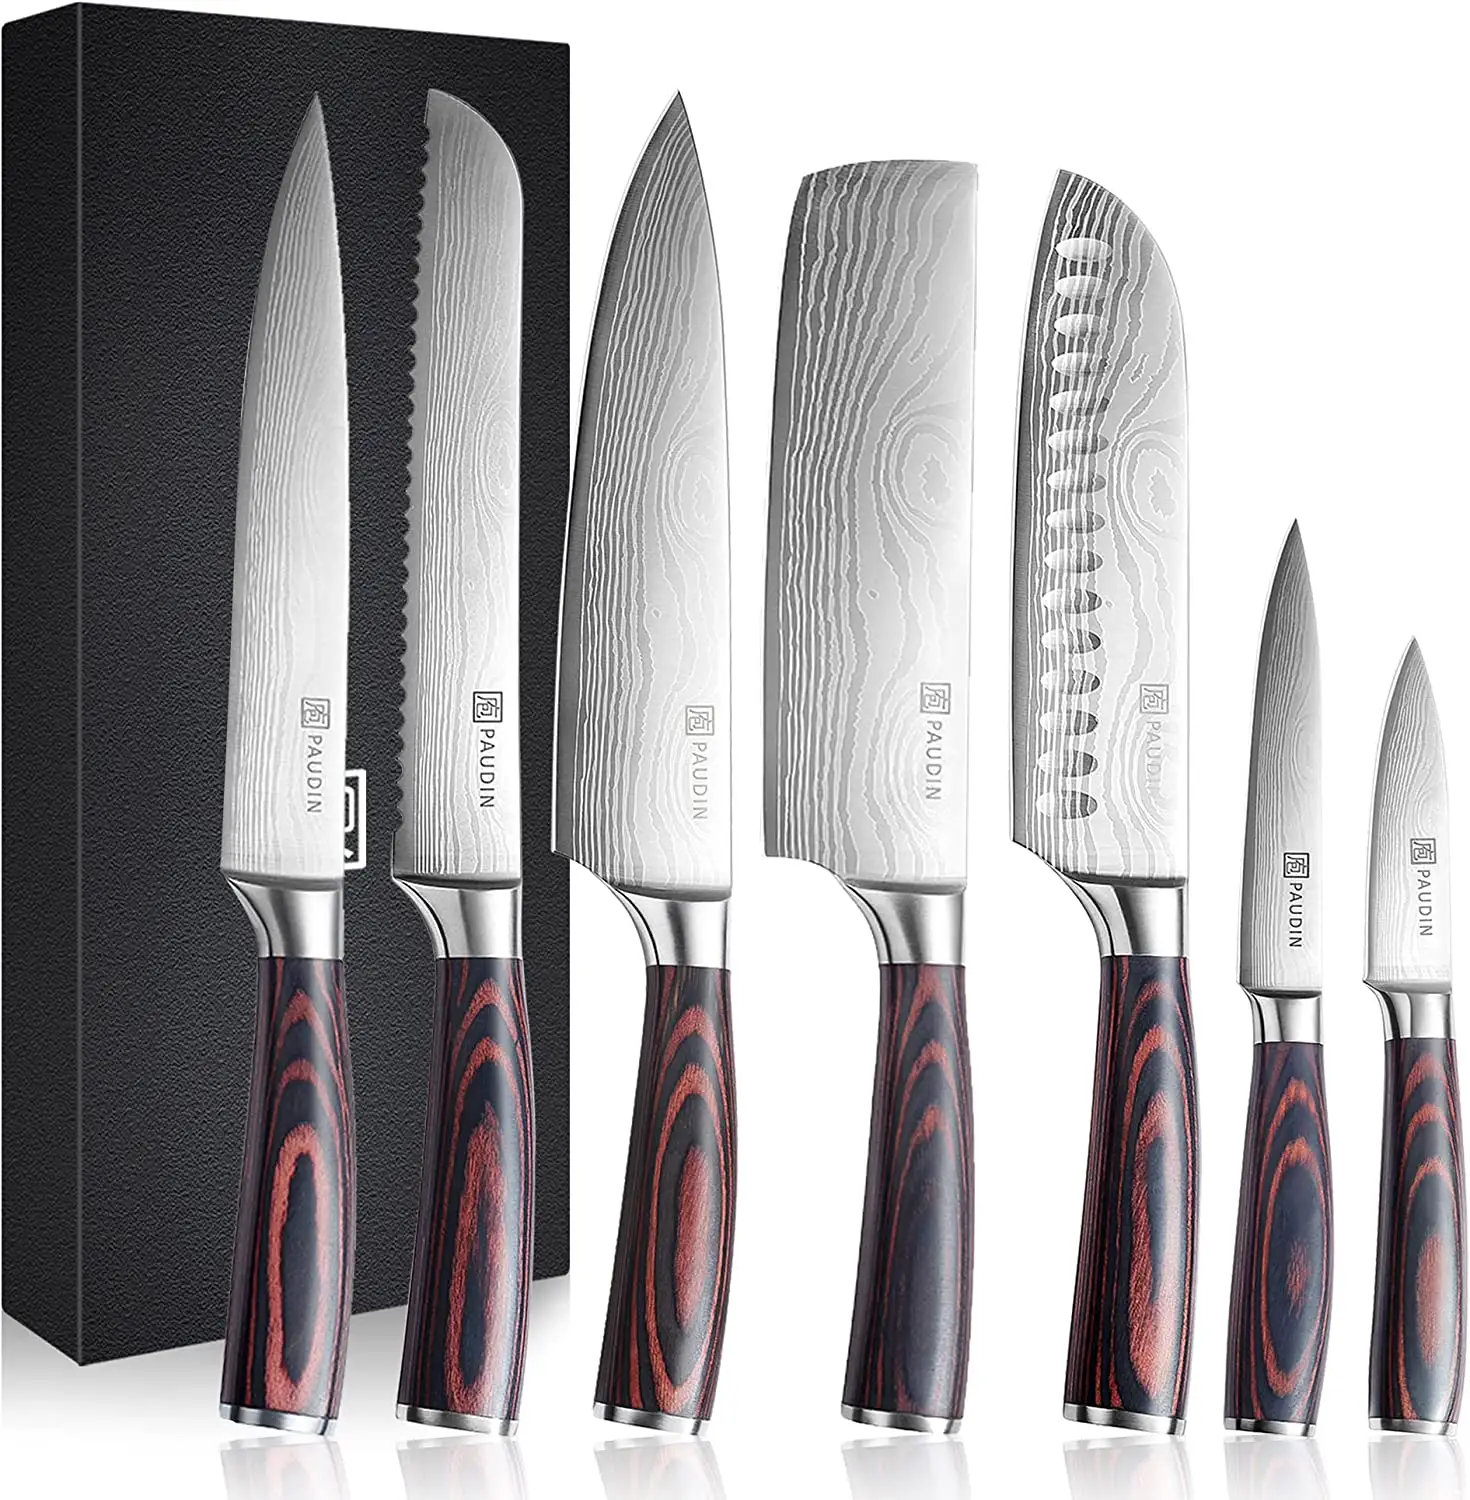 PAUDIN Utility 7PCS cuchillo de cocina caja de madera regalo Hoja afilada de acero inoxidable con mango de madera cuchillo de chef de carnicero